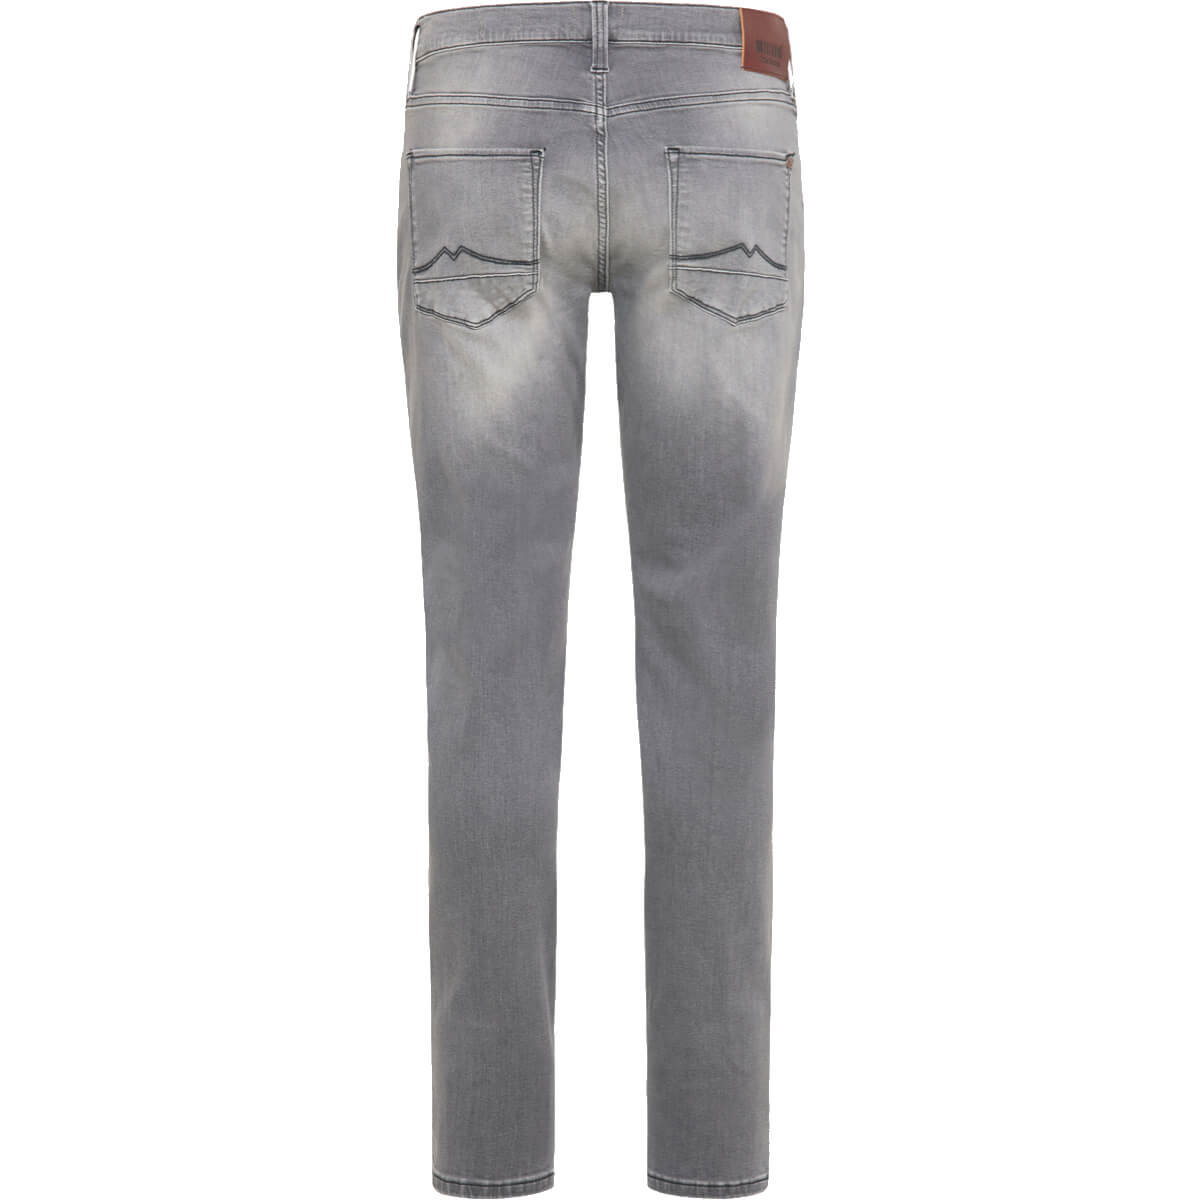 mustang jeans vegas light grey 1010574 4500 883 crop3